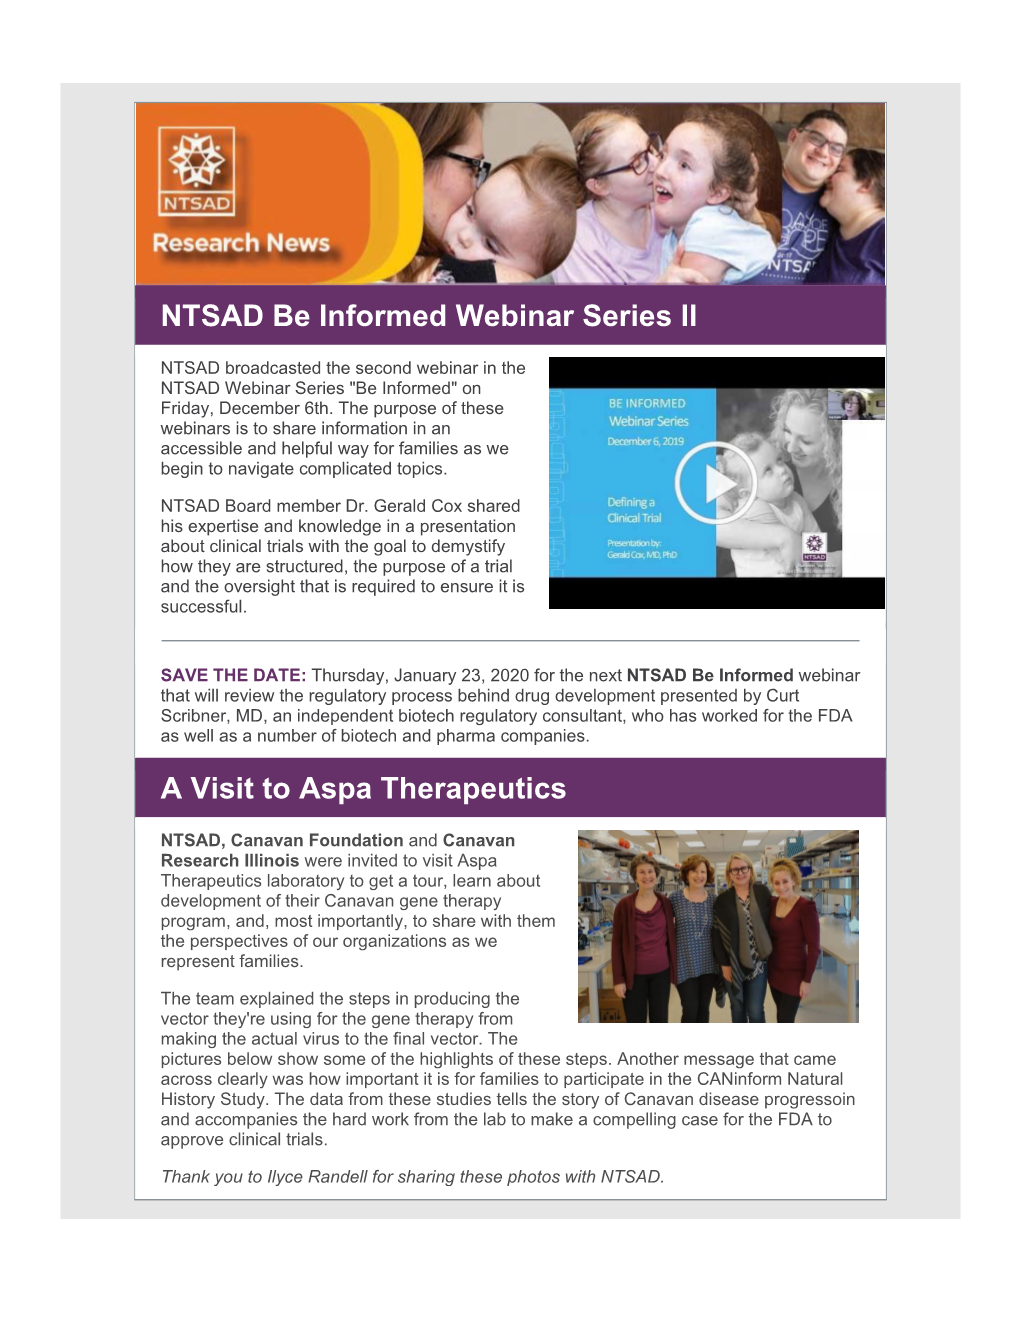 NTSAD Be Informed Webinar Series II a Visit to Aspa Therapeutics